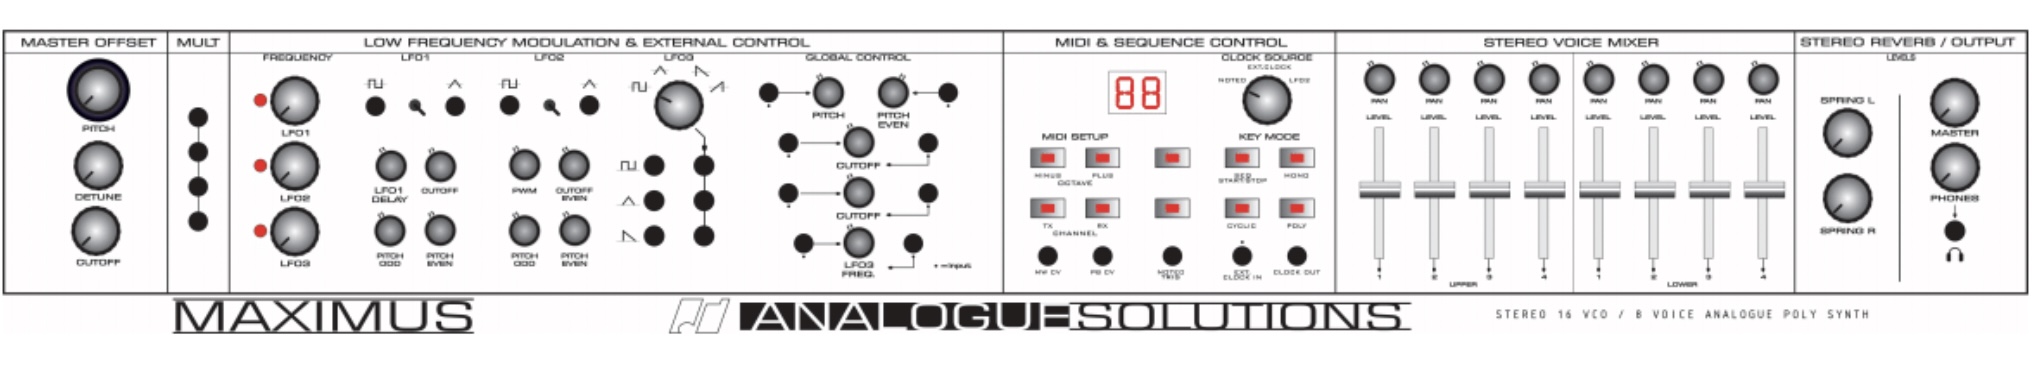 analogue-solutions-maximus-5805795.jpg